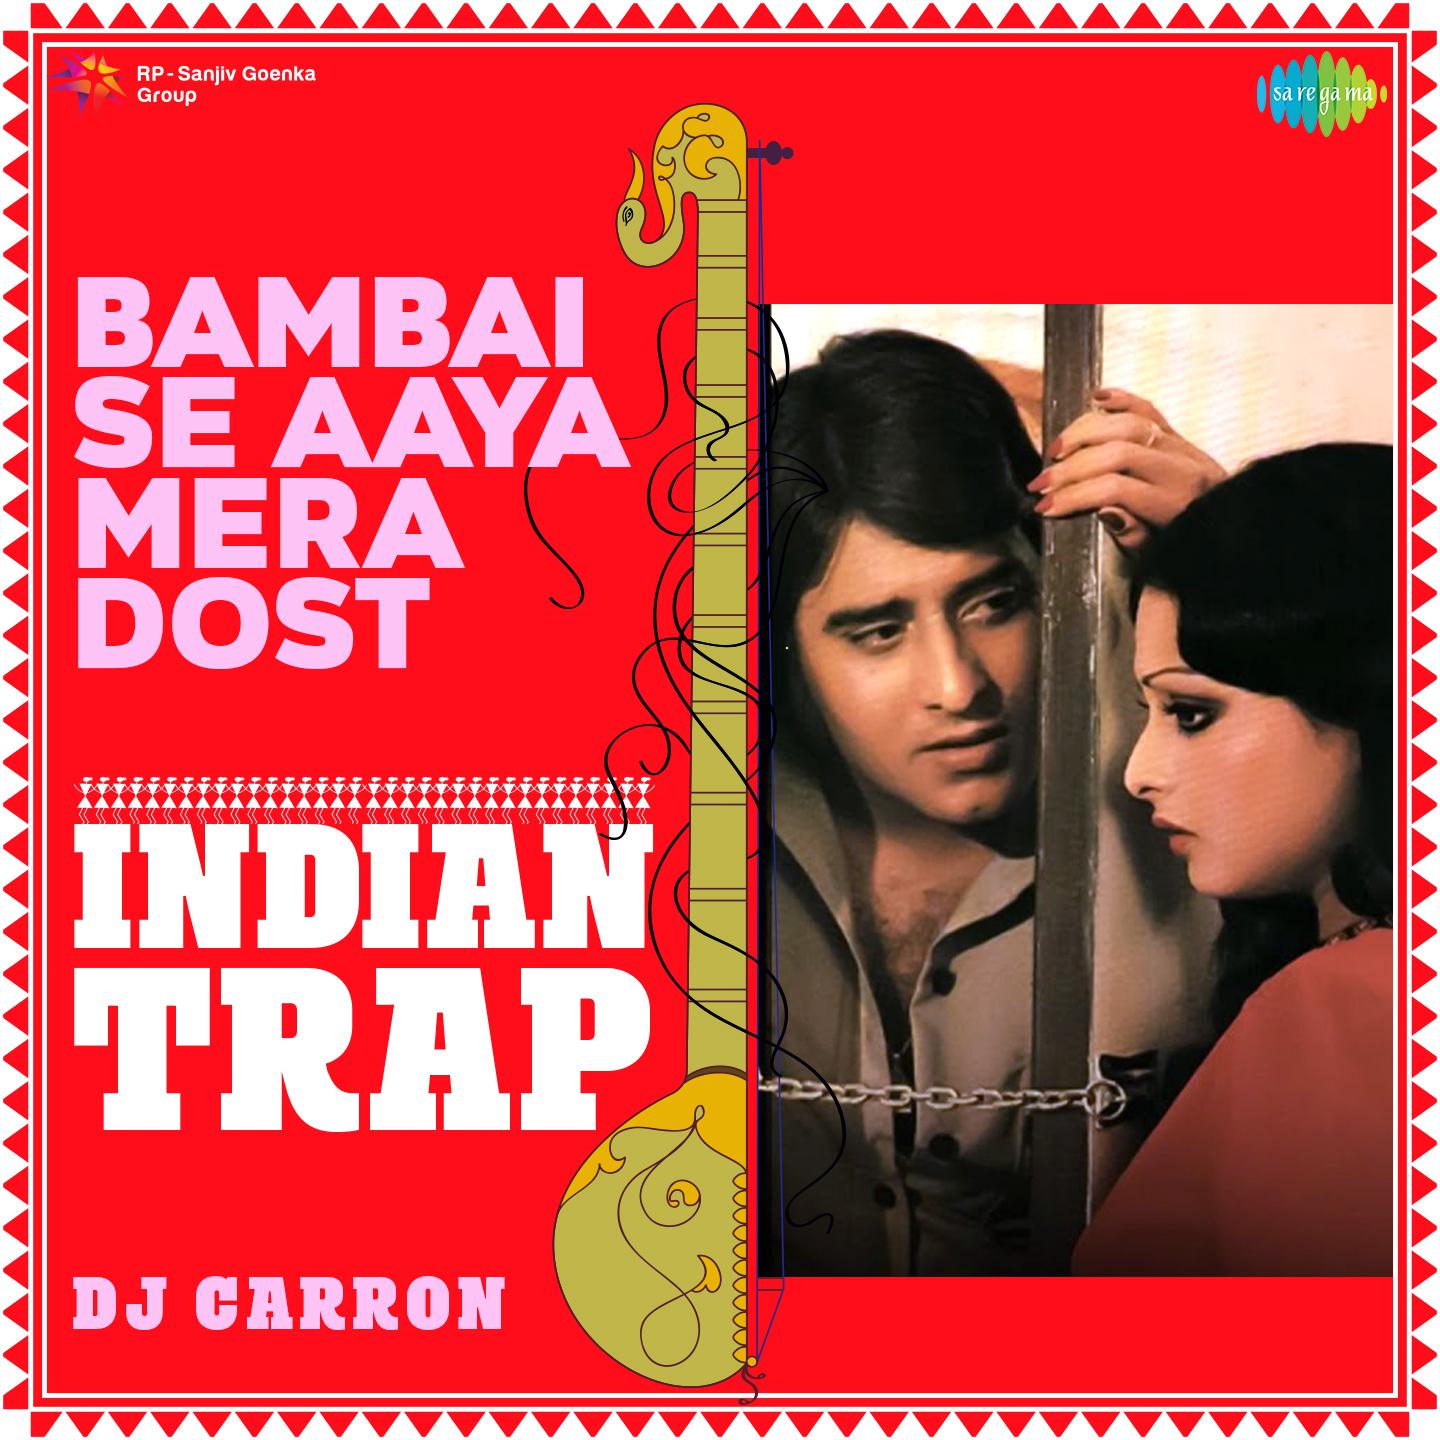 DJ Carron - Bambai Se Aaya Mera Dost - Indian Trap